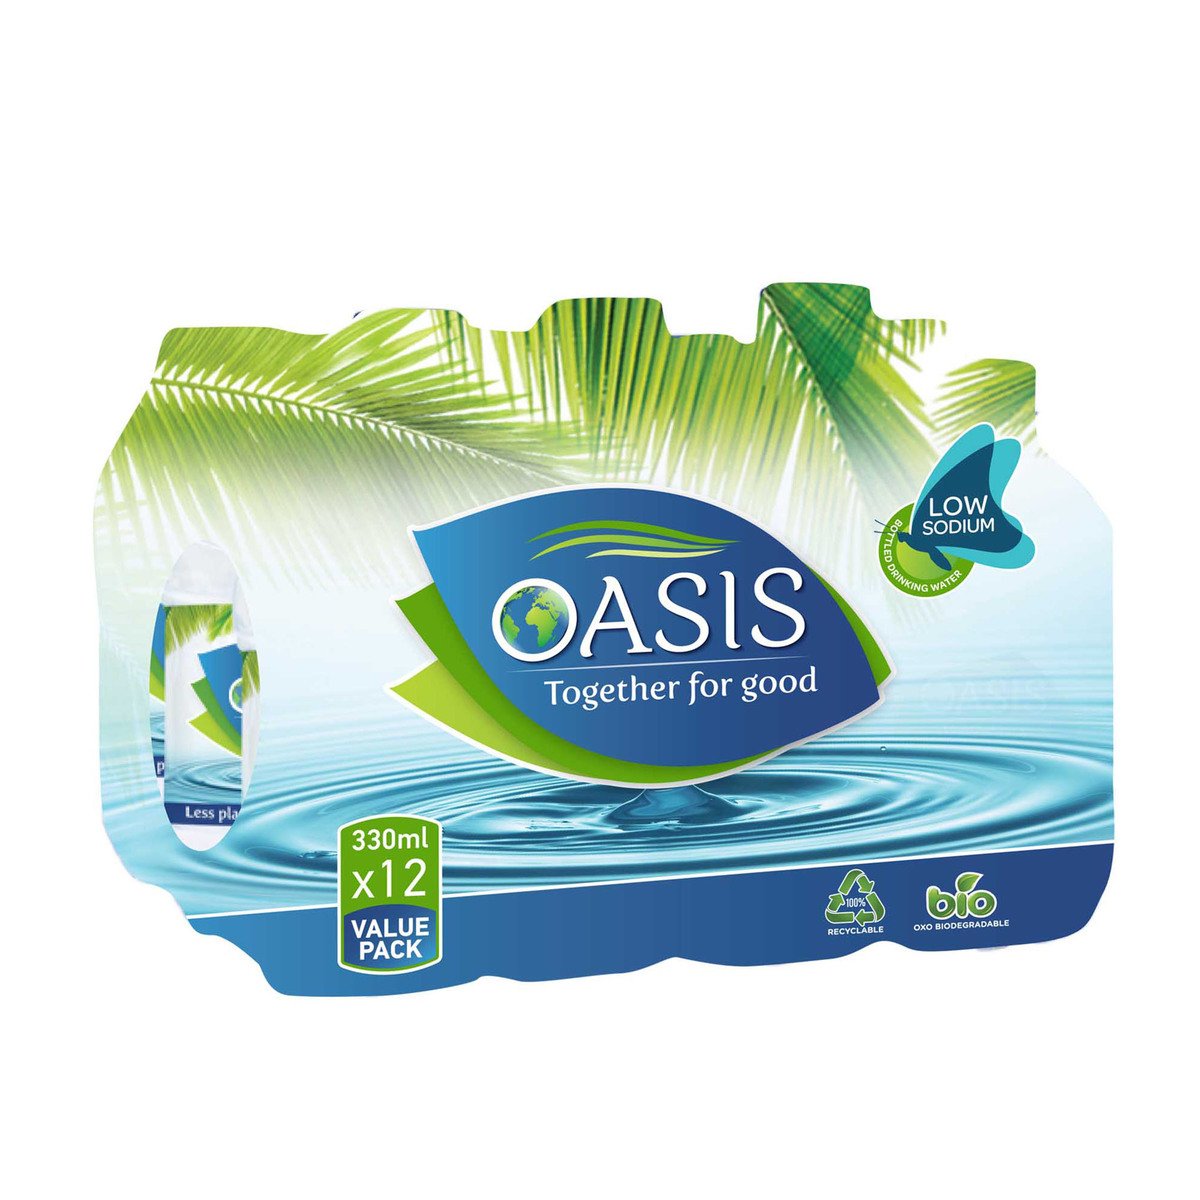 Oasis Bottled Drinking Water 24 x 330 ml